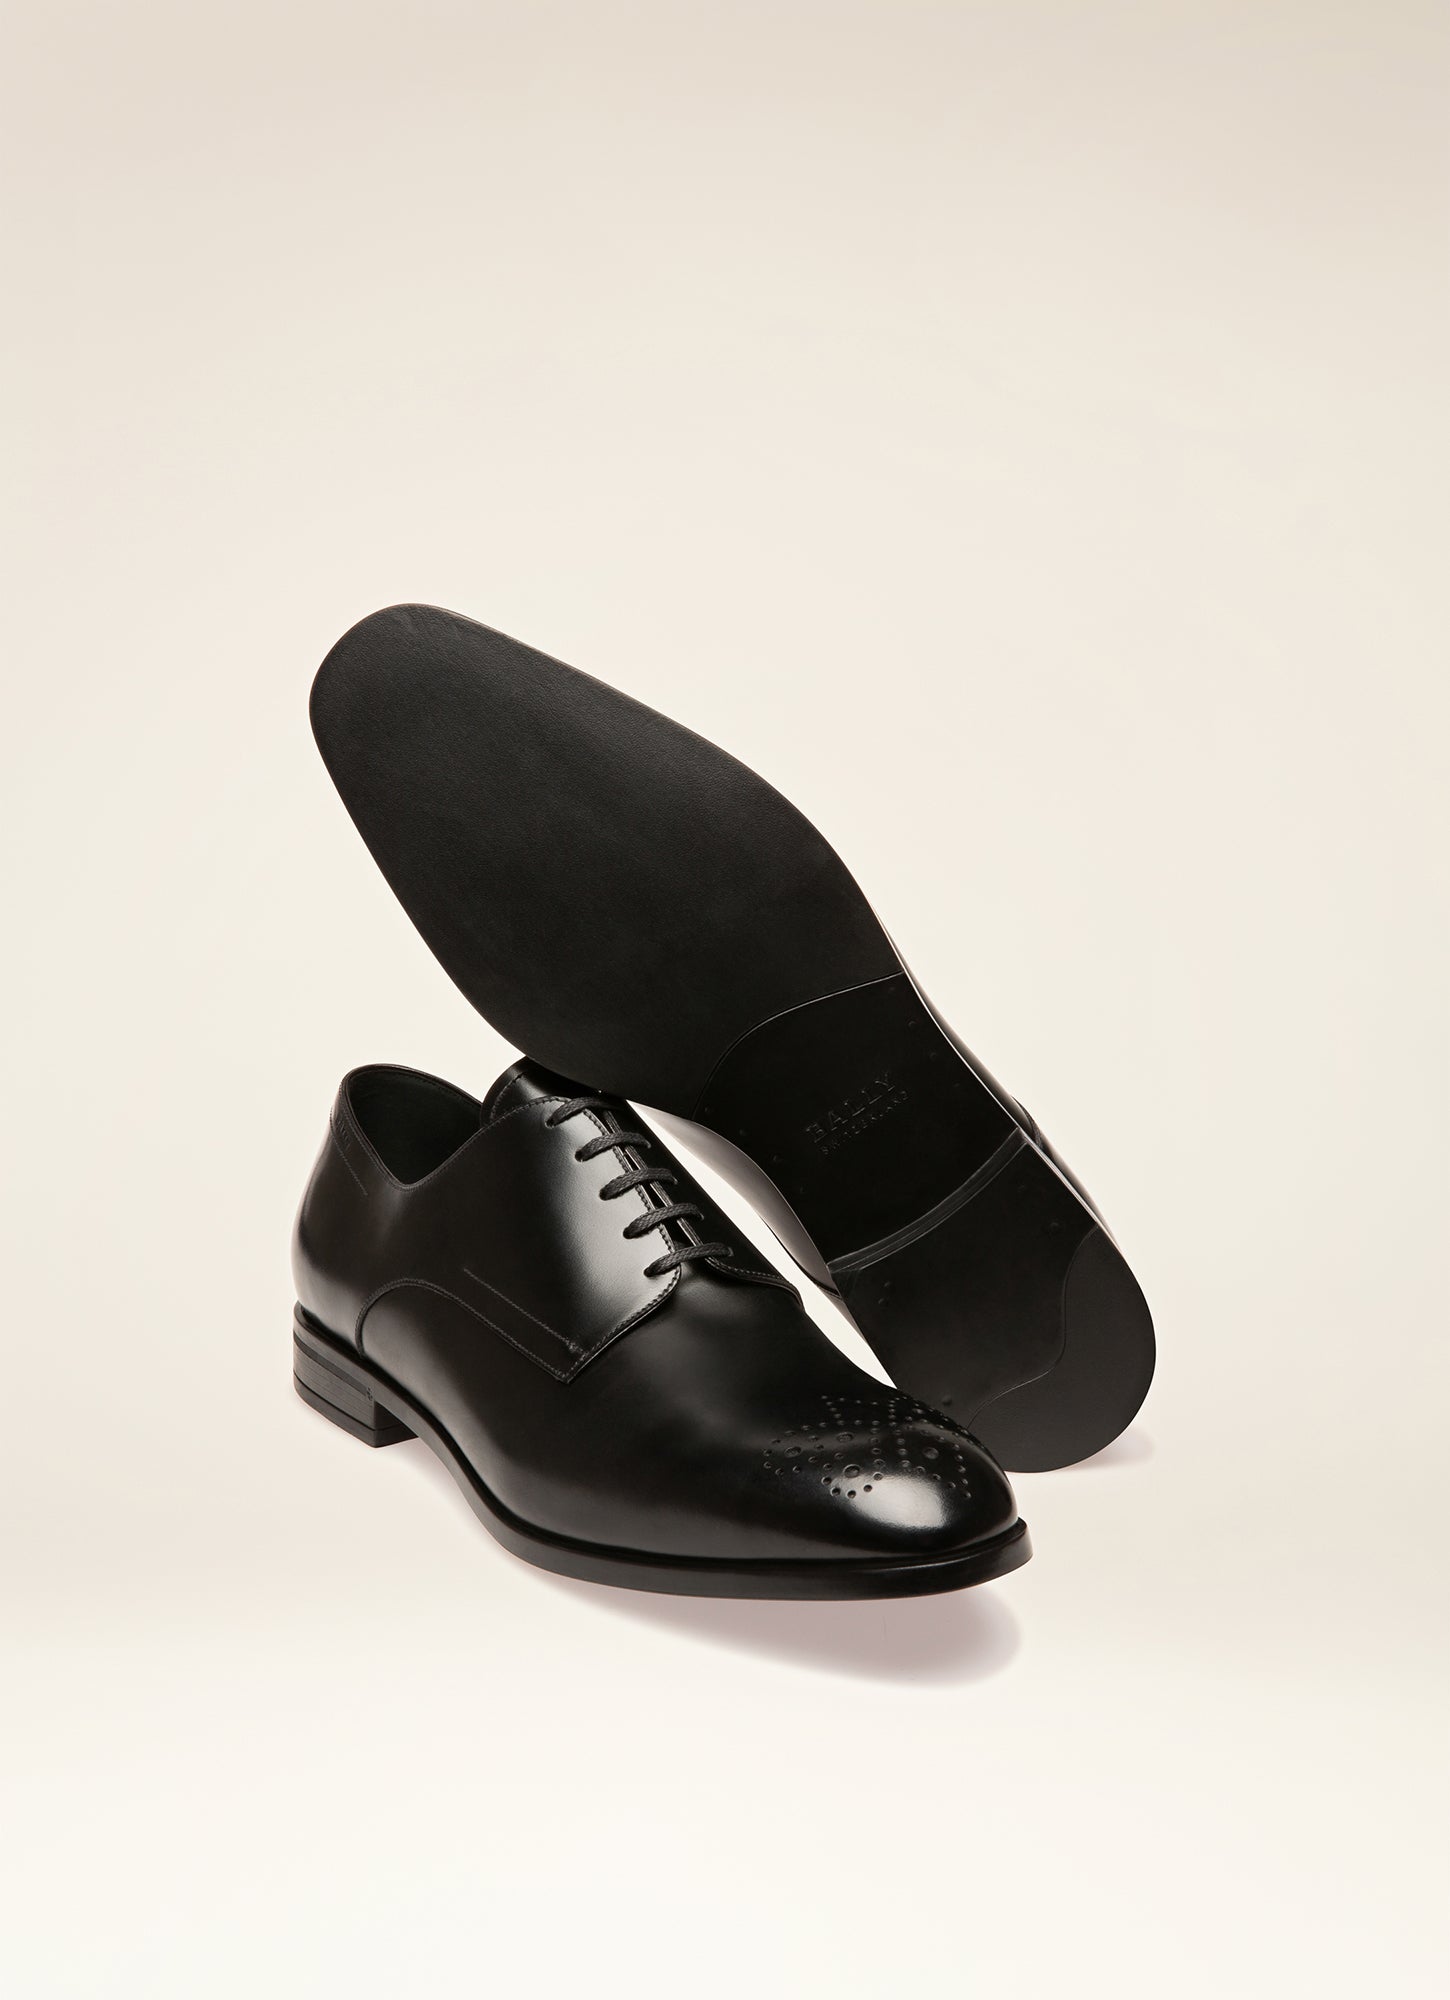 Buy Formal Derby Shoes for Men Dubai, UAE | Bally